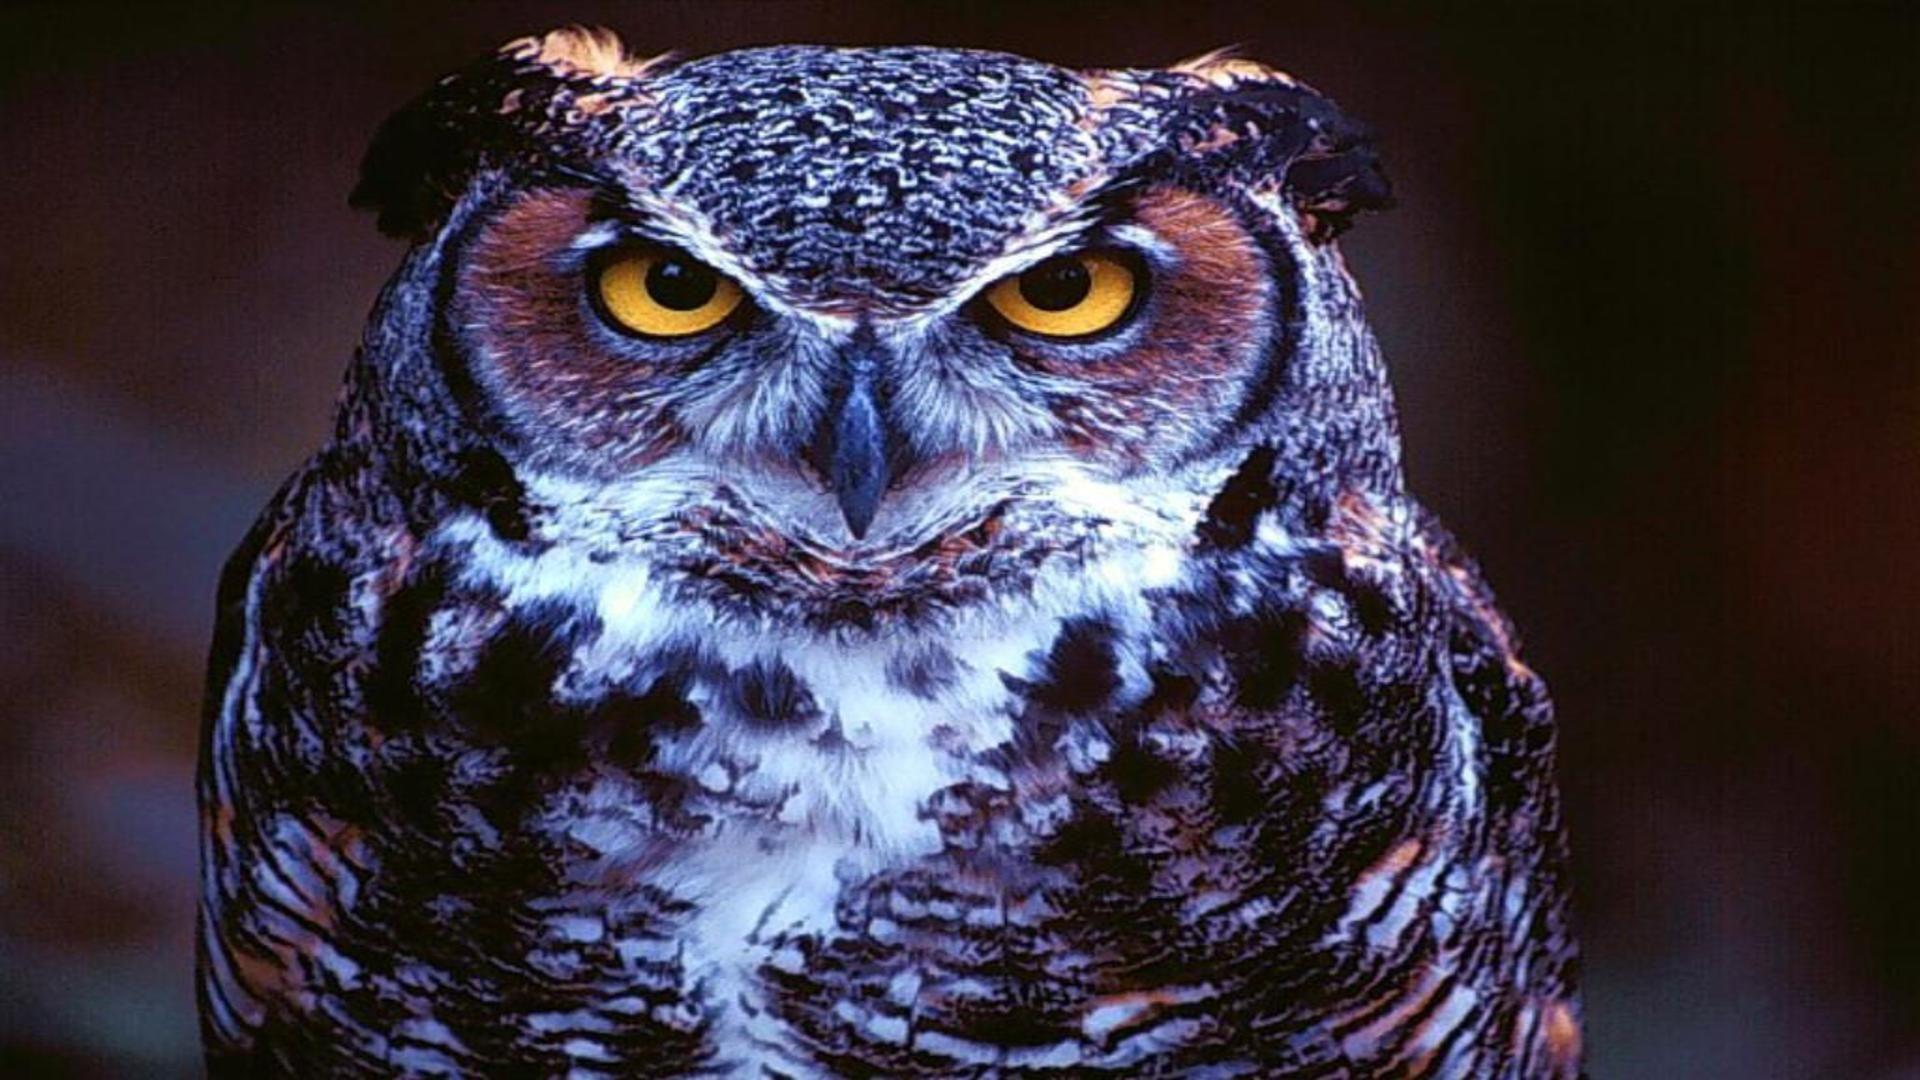 Serious owl bird face close up portrait free desktop background